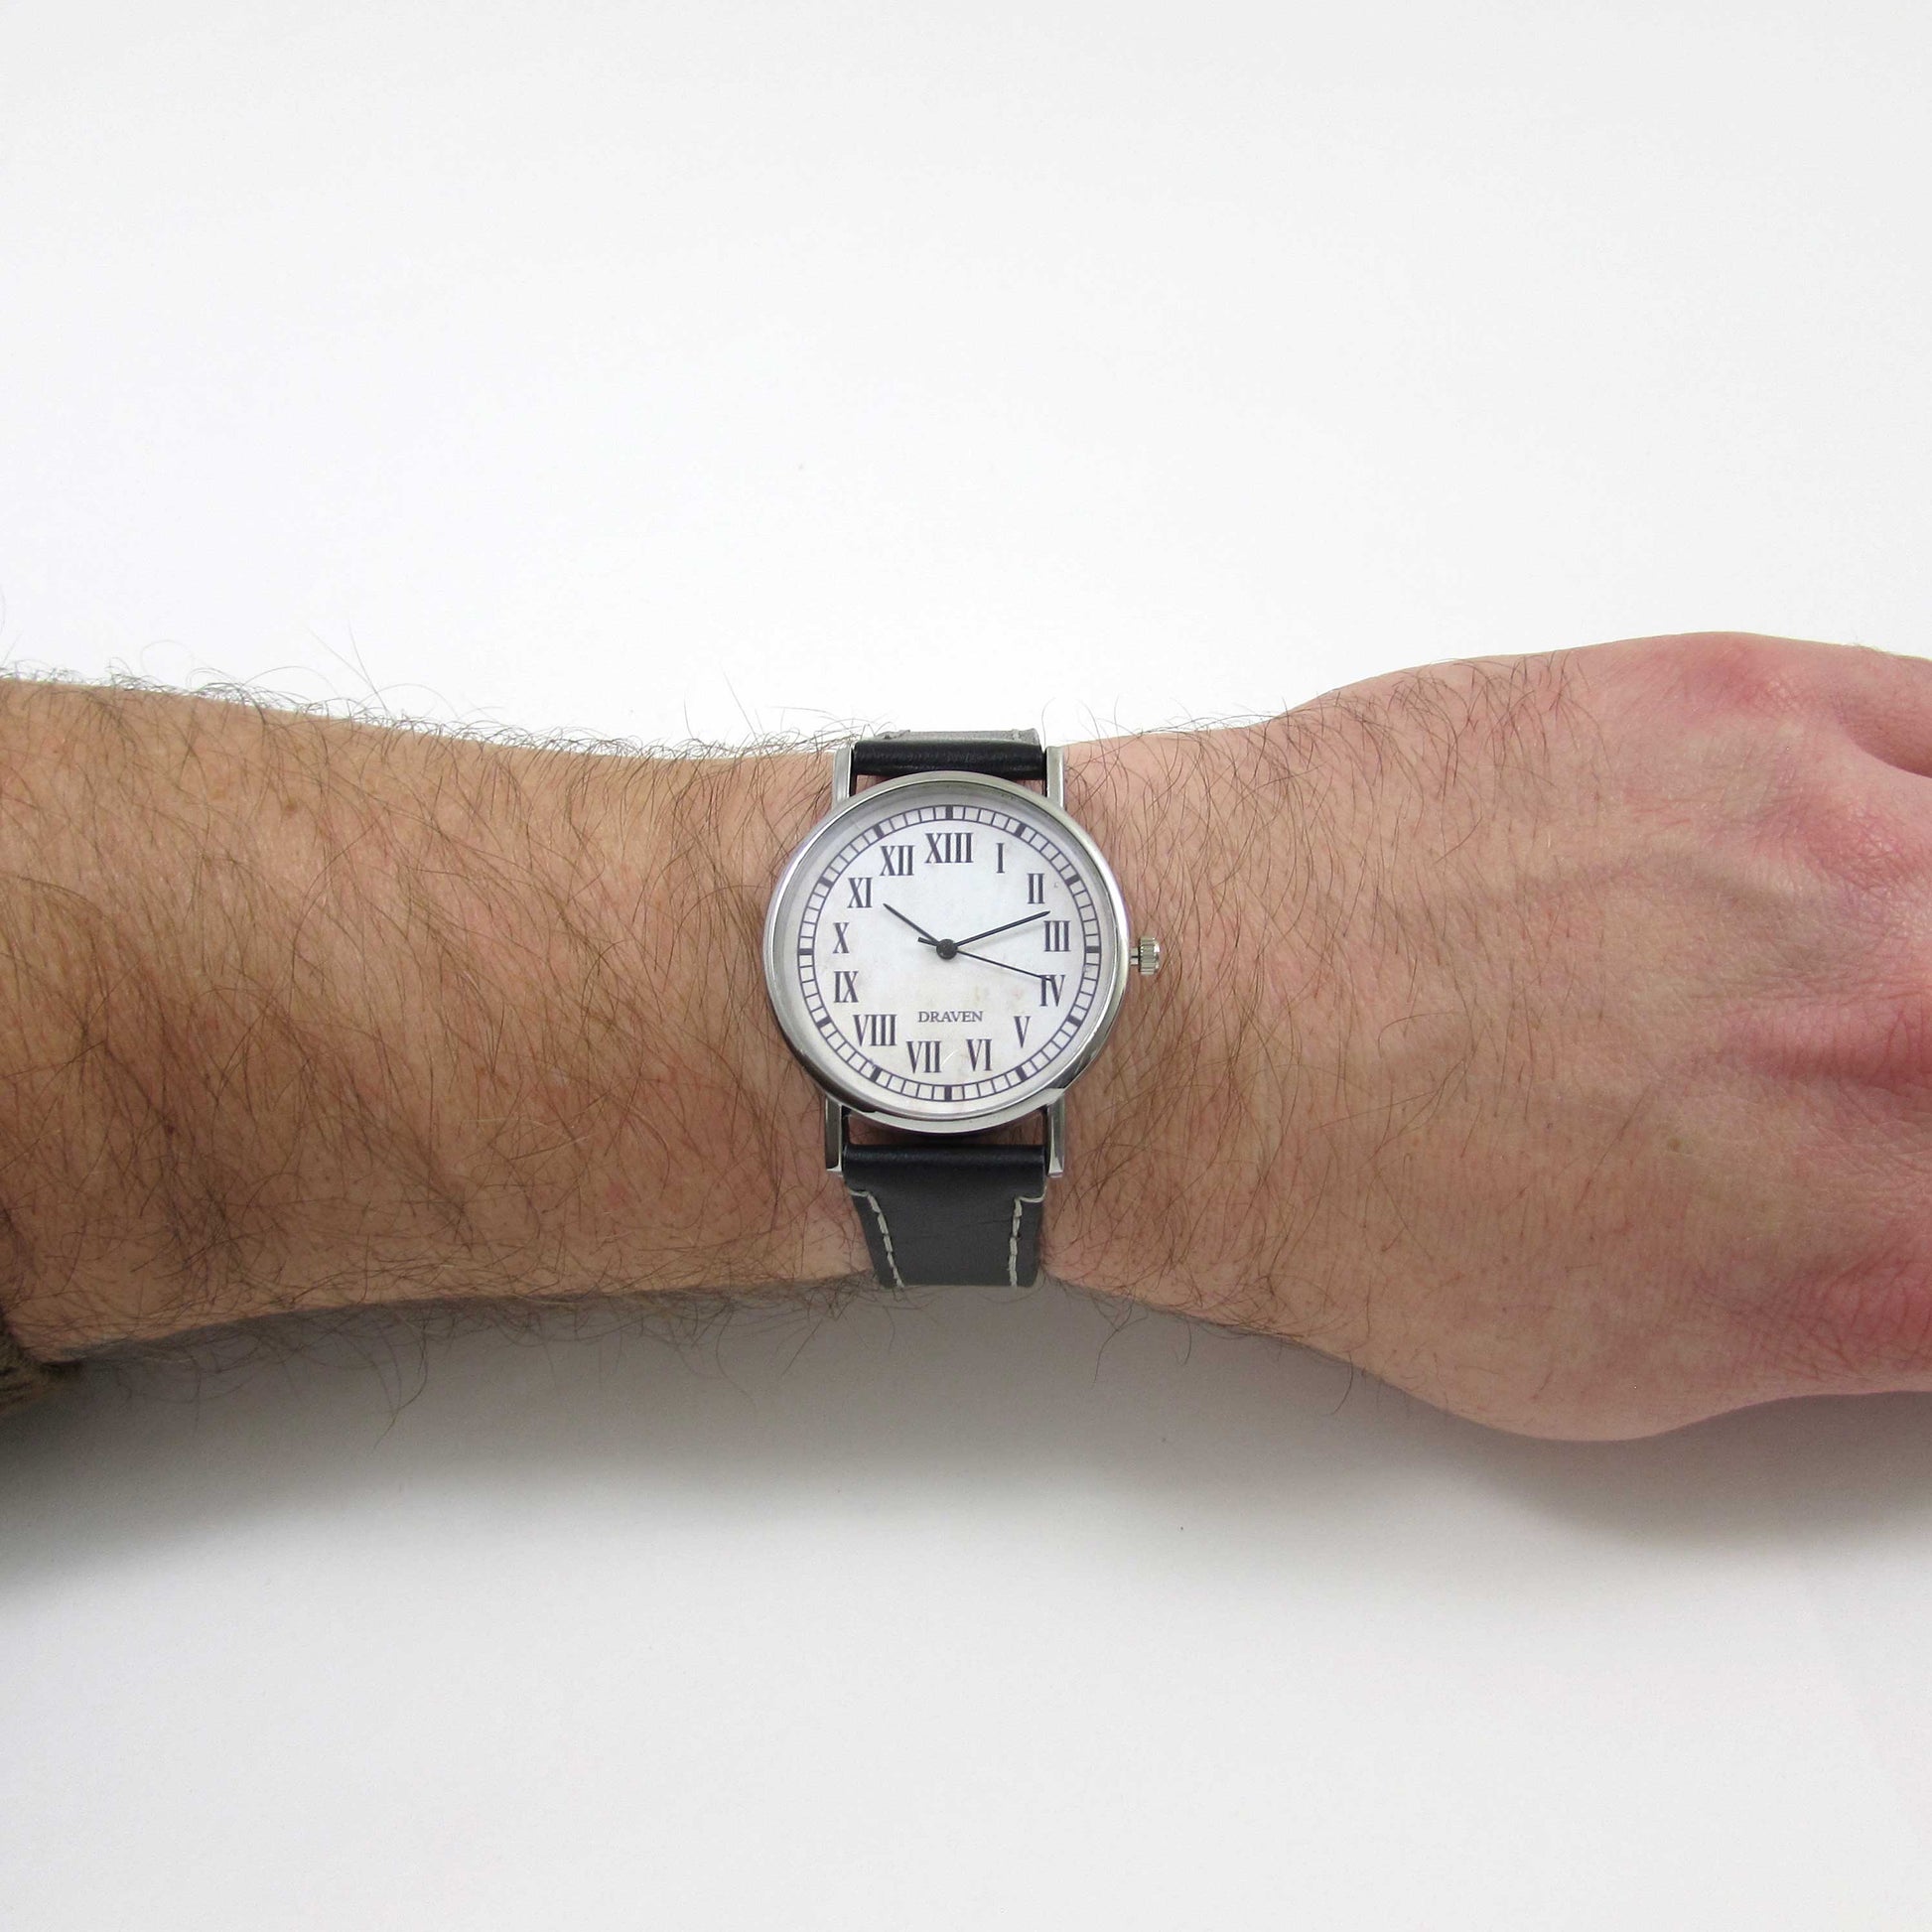 thirteen hour wrist watch displayed on a wrist